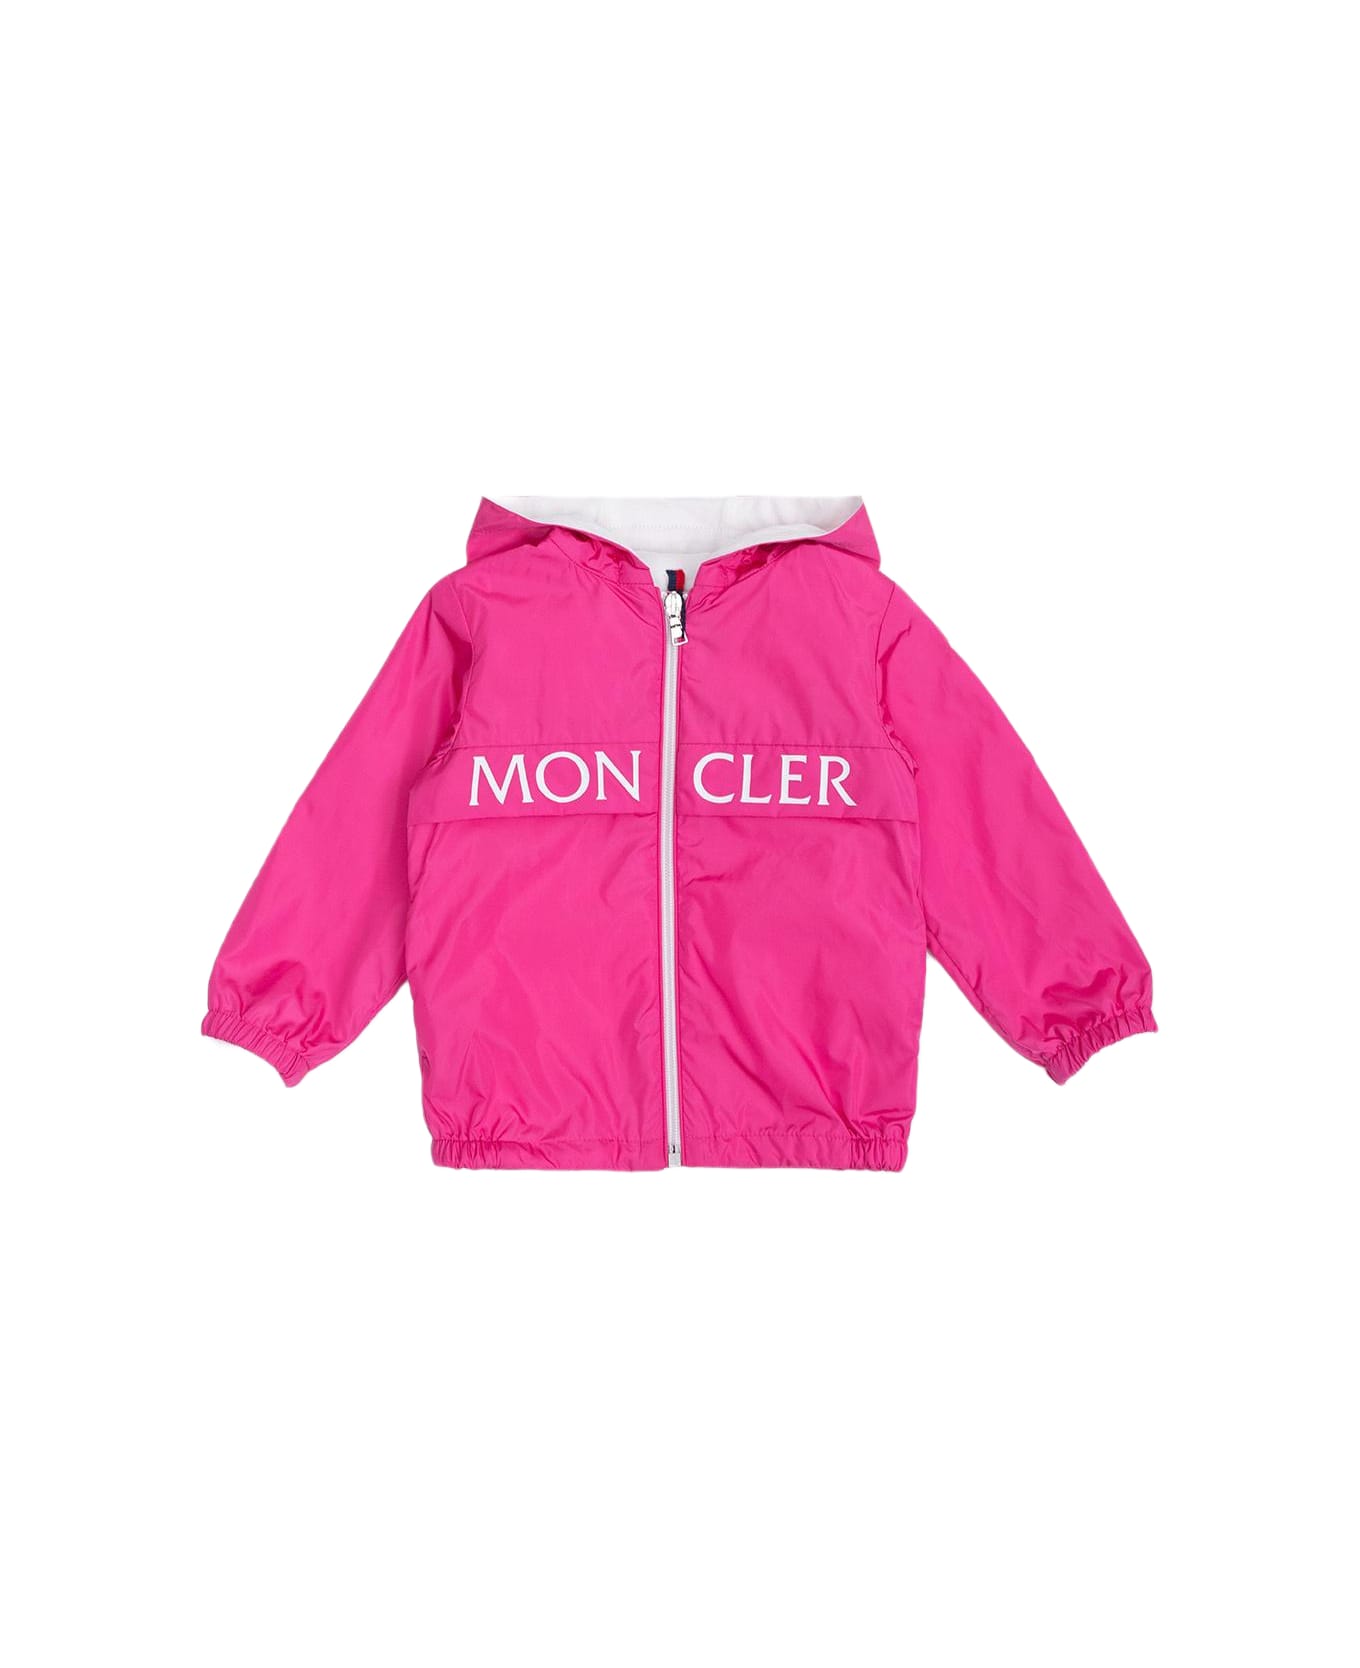 Moncler 'erdvile' Hooded Jacket